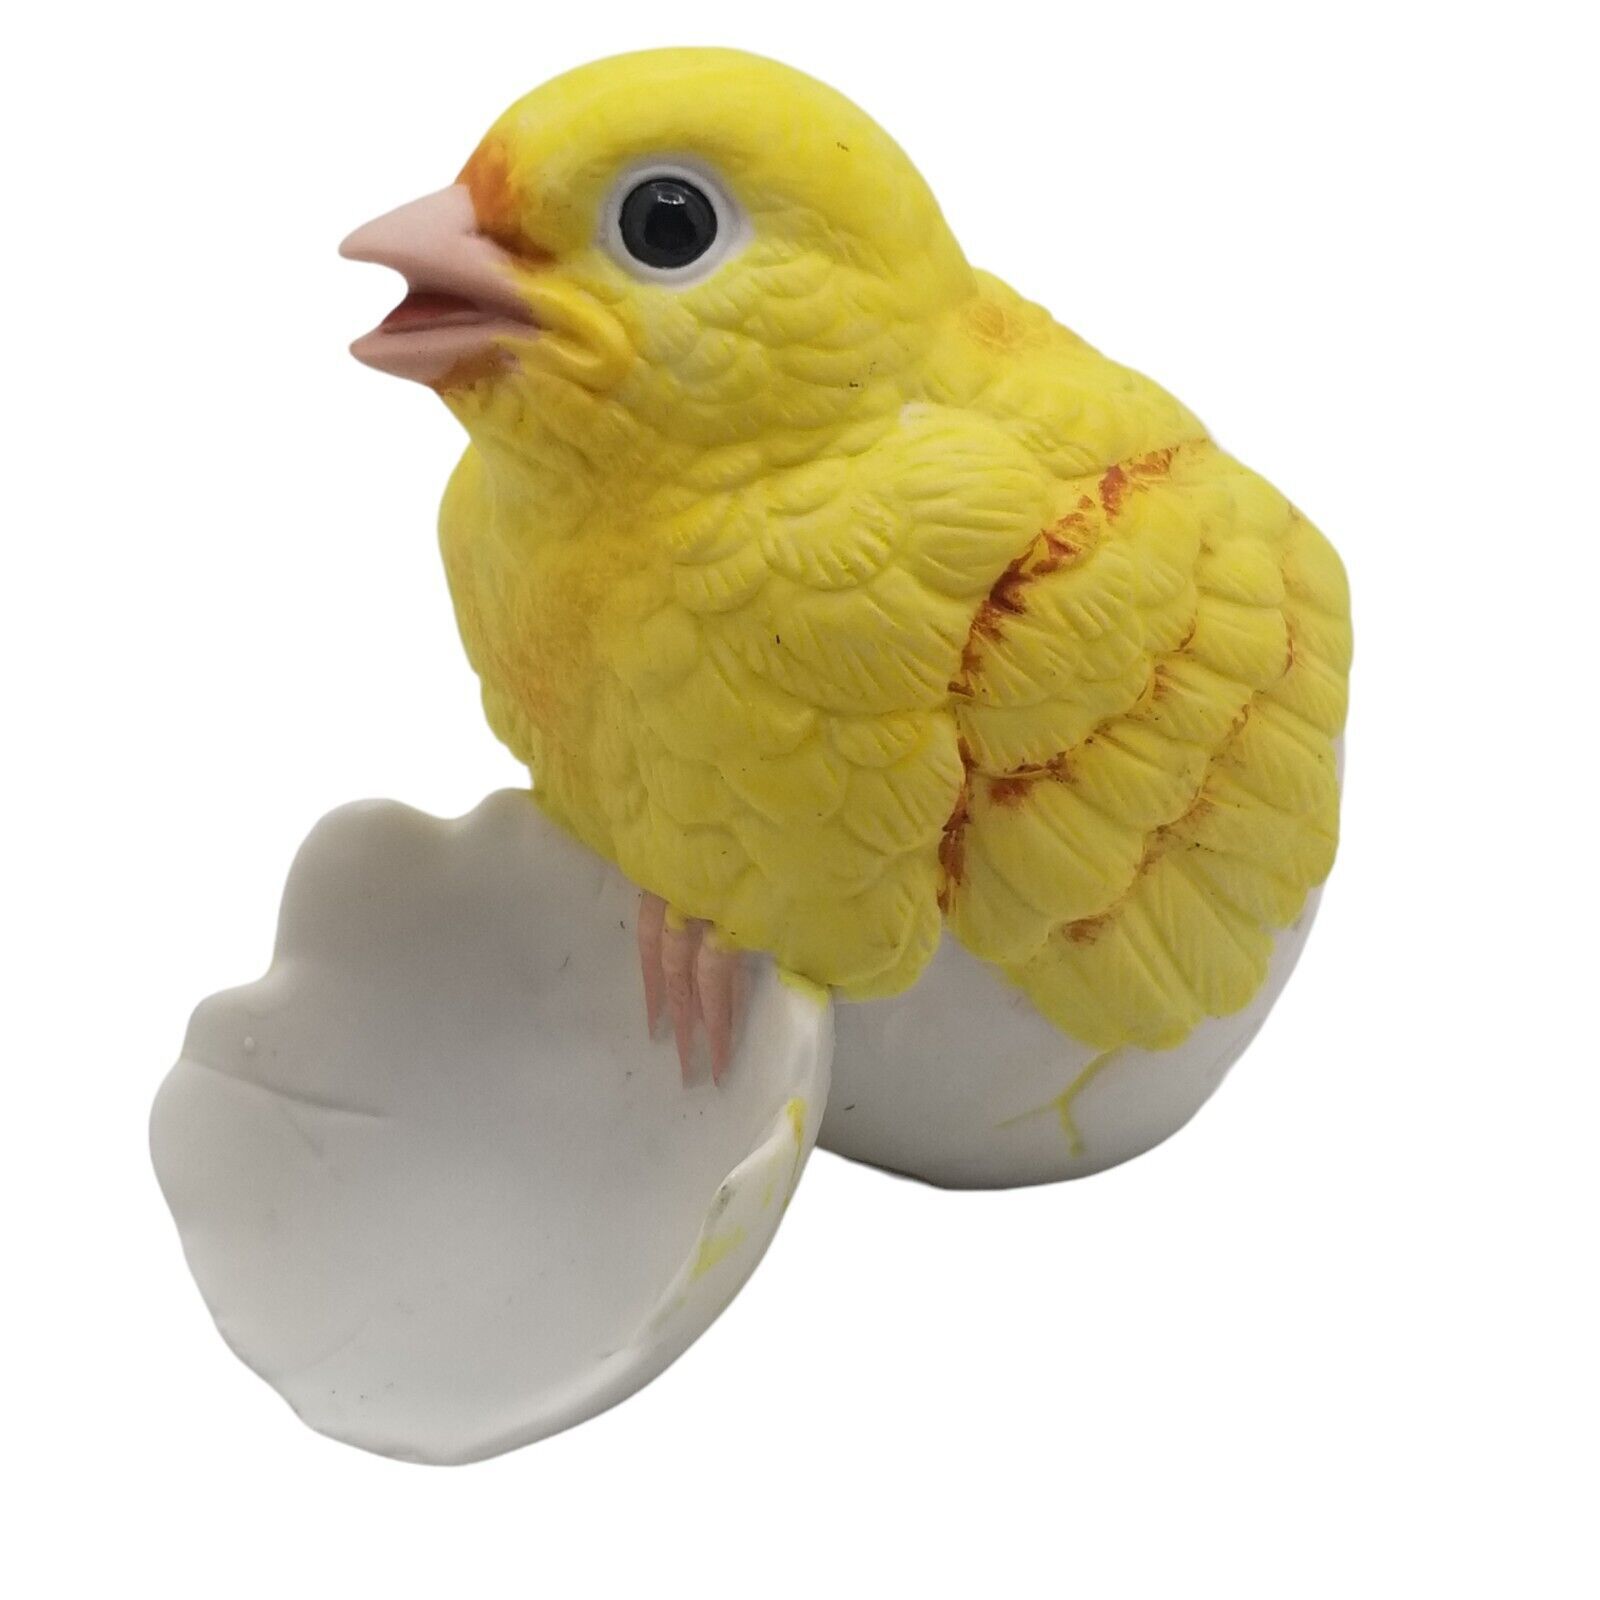 Vintage Porcelain Canary Bird Figurine with Egg Shell 1990 Andrea by Sadak #8618 - $26.94